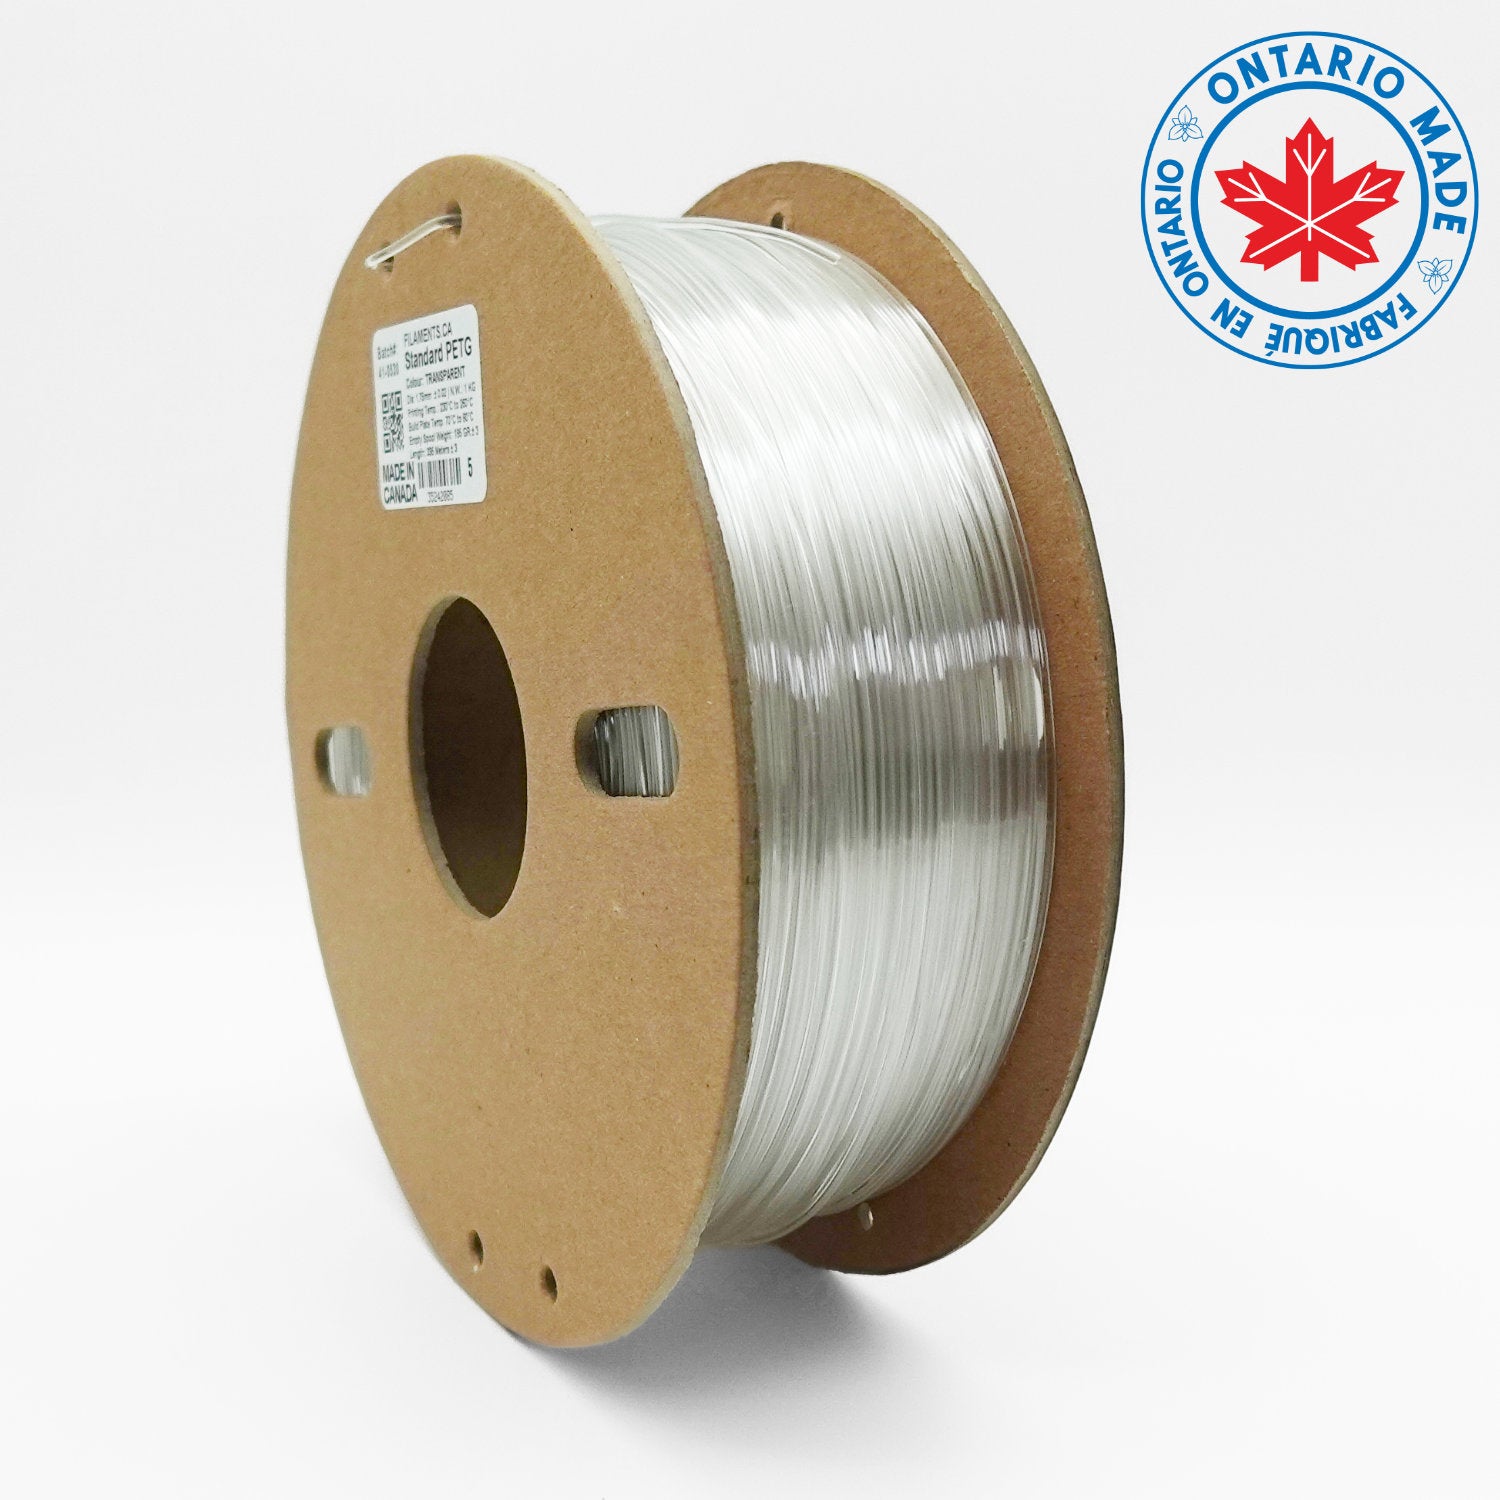 Transparent - Standard PETG Filament - 1.75mm, 1kg – 3D Printing